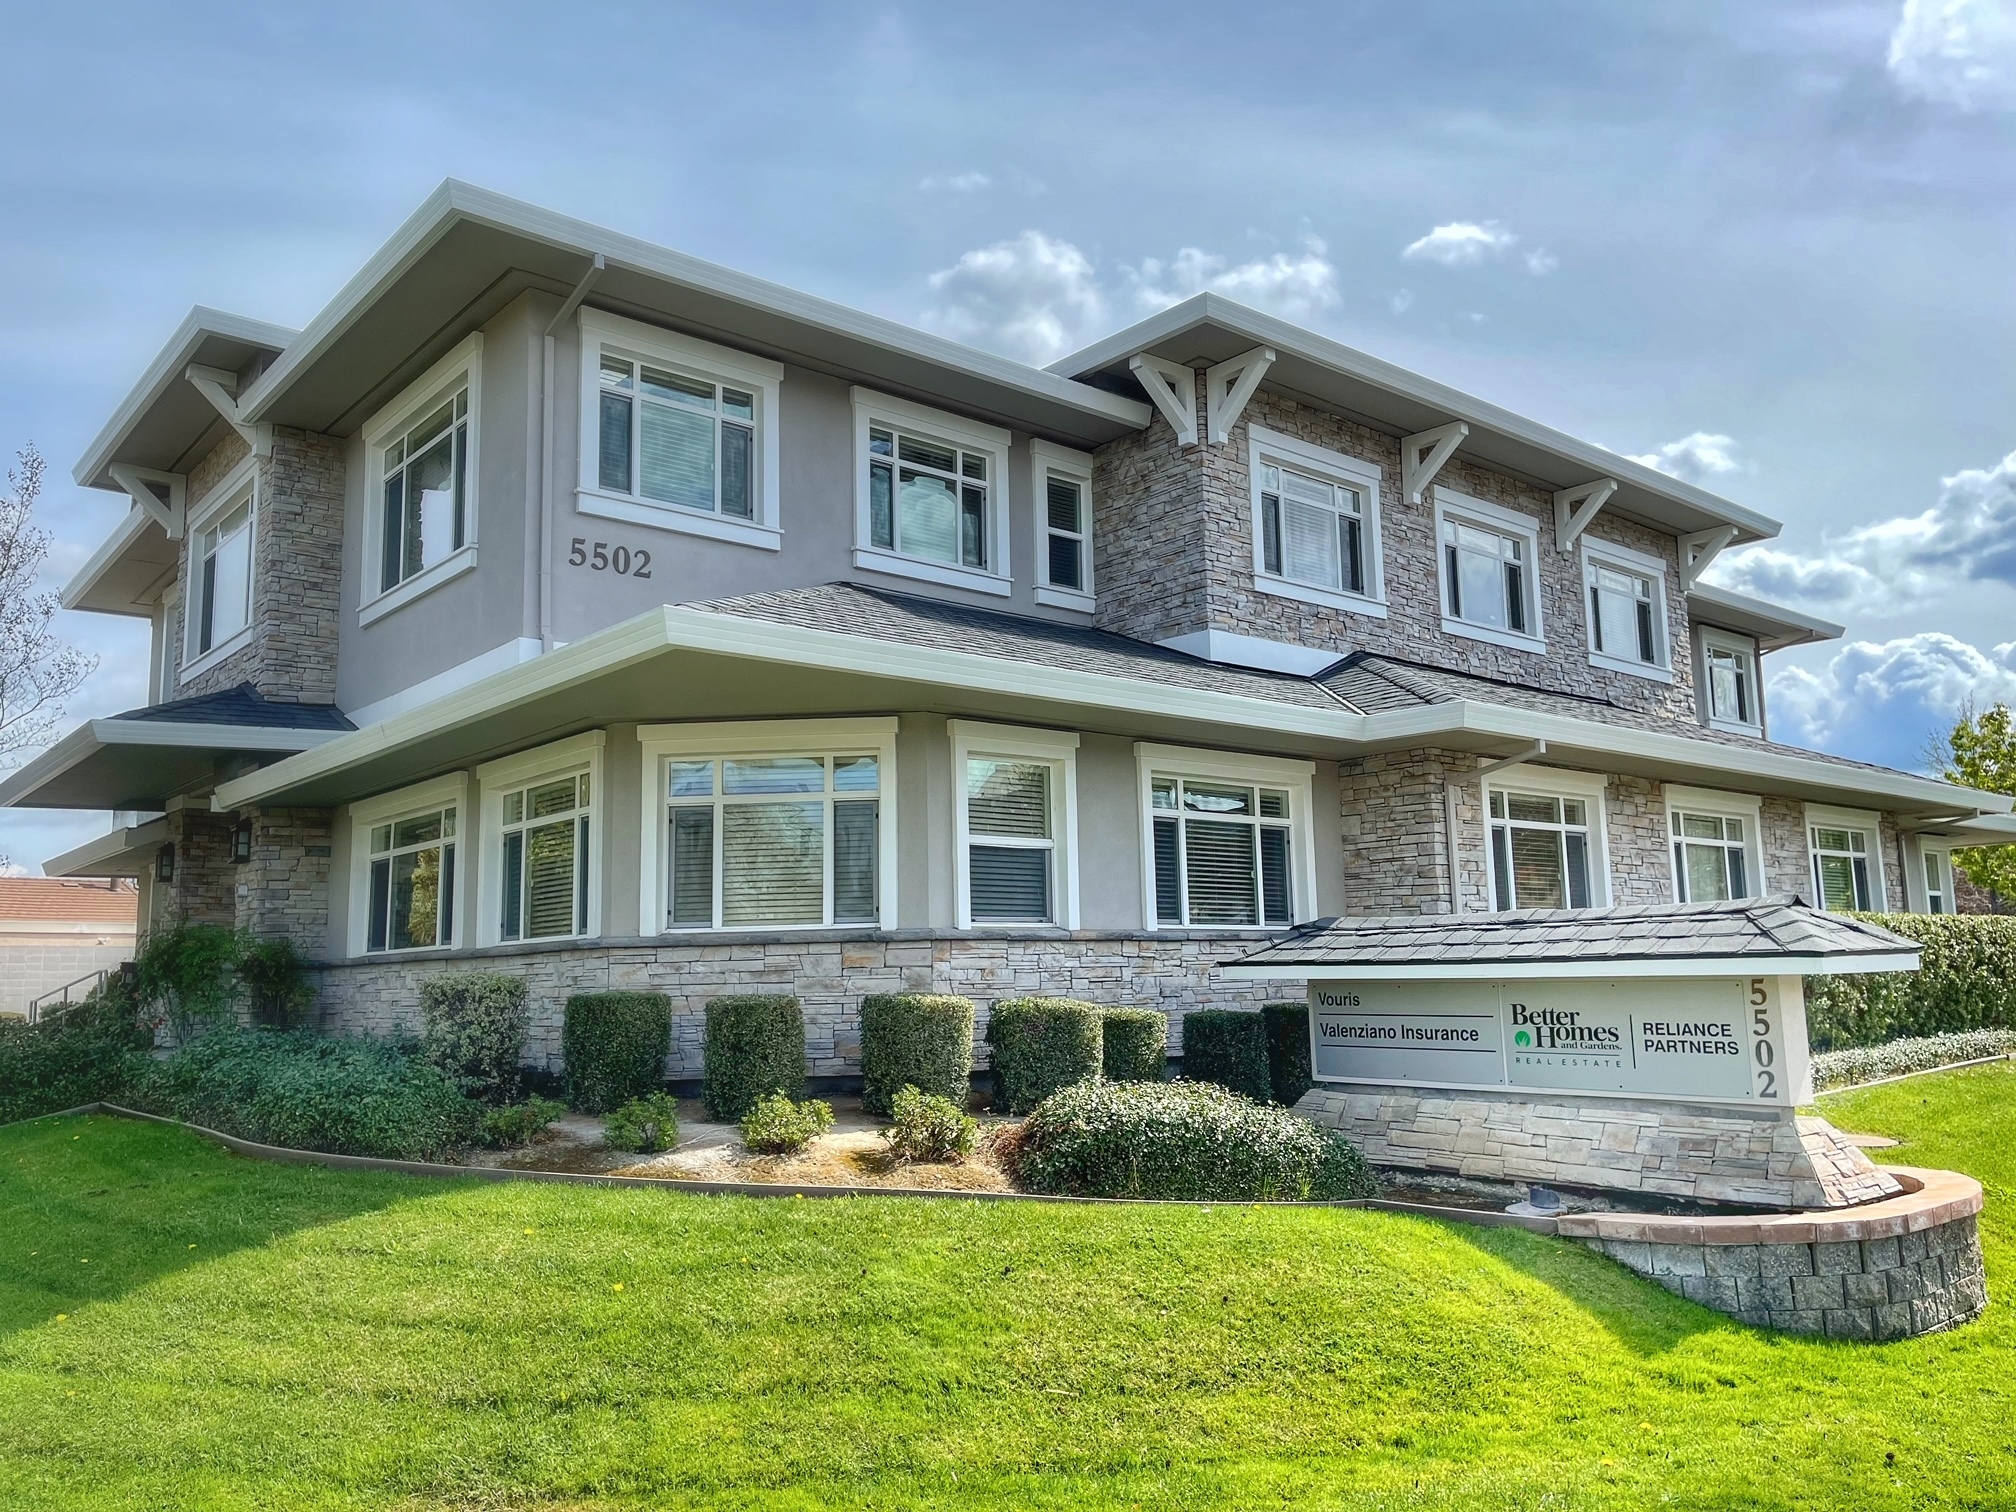 Pleasanton,Pleasanton,Better Homes and Gardens Reliance Partners